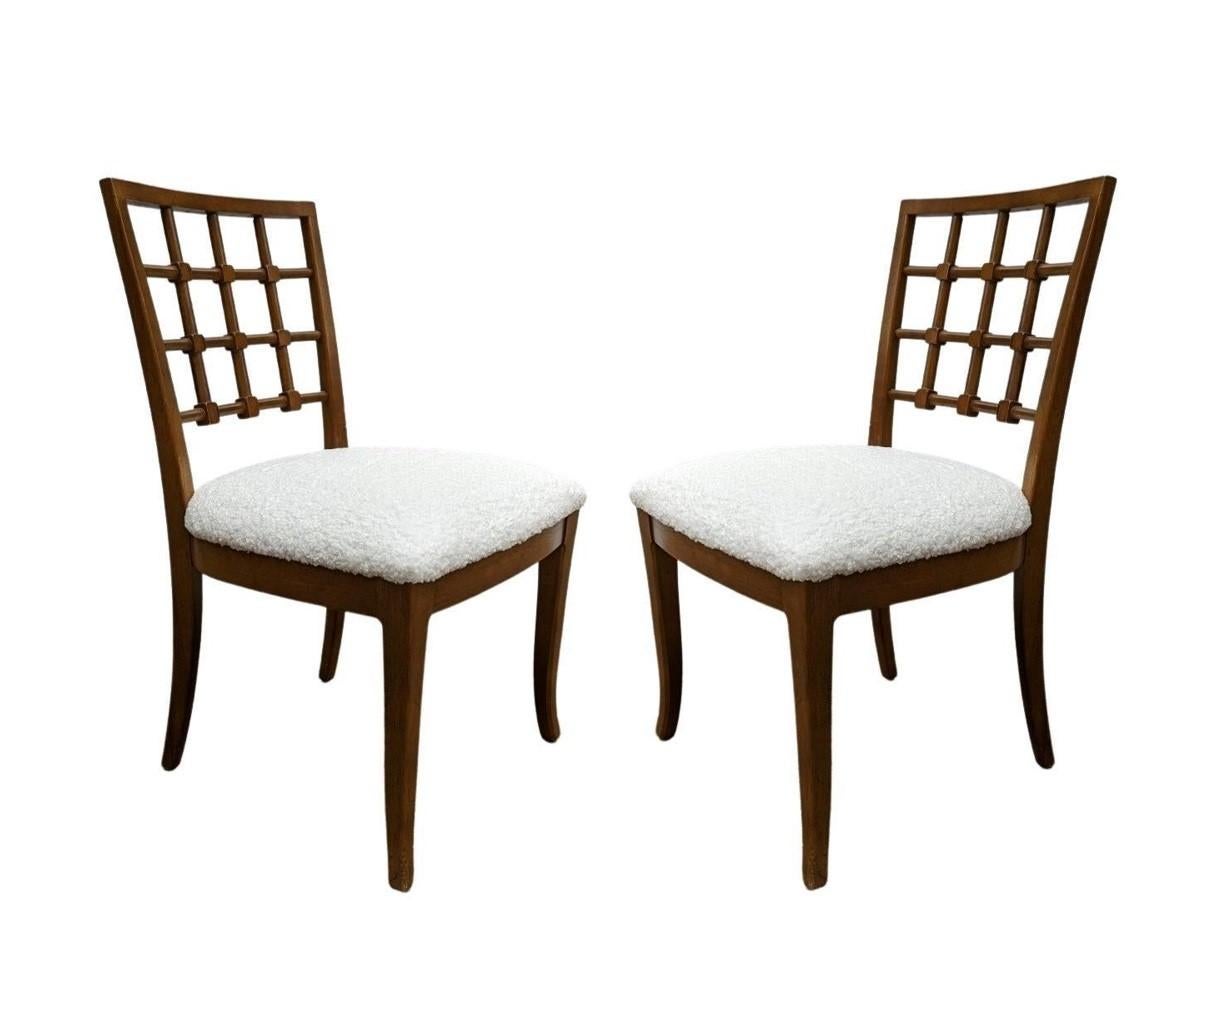 Eight Modernist Dining Chairs Designed by Edmund Karpinski for Drexel For Sale 2